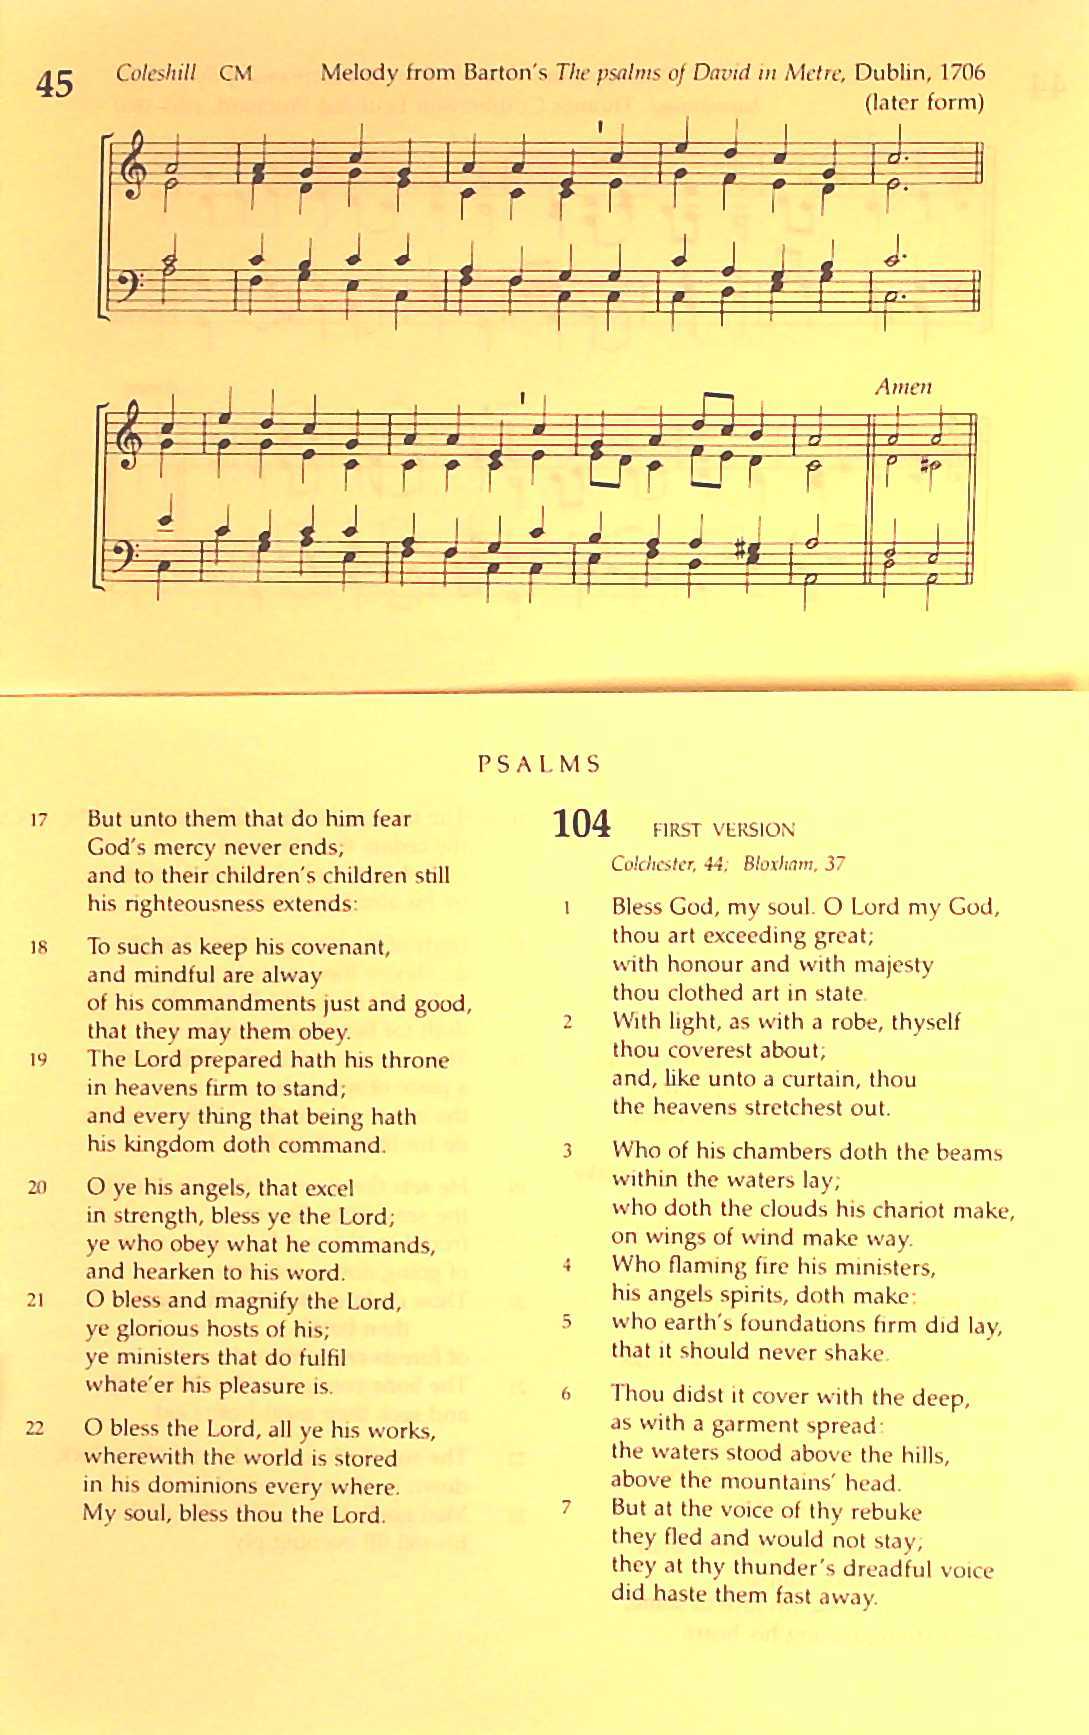 The Irish Presbyterian Hymbook page 390